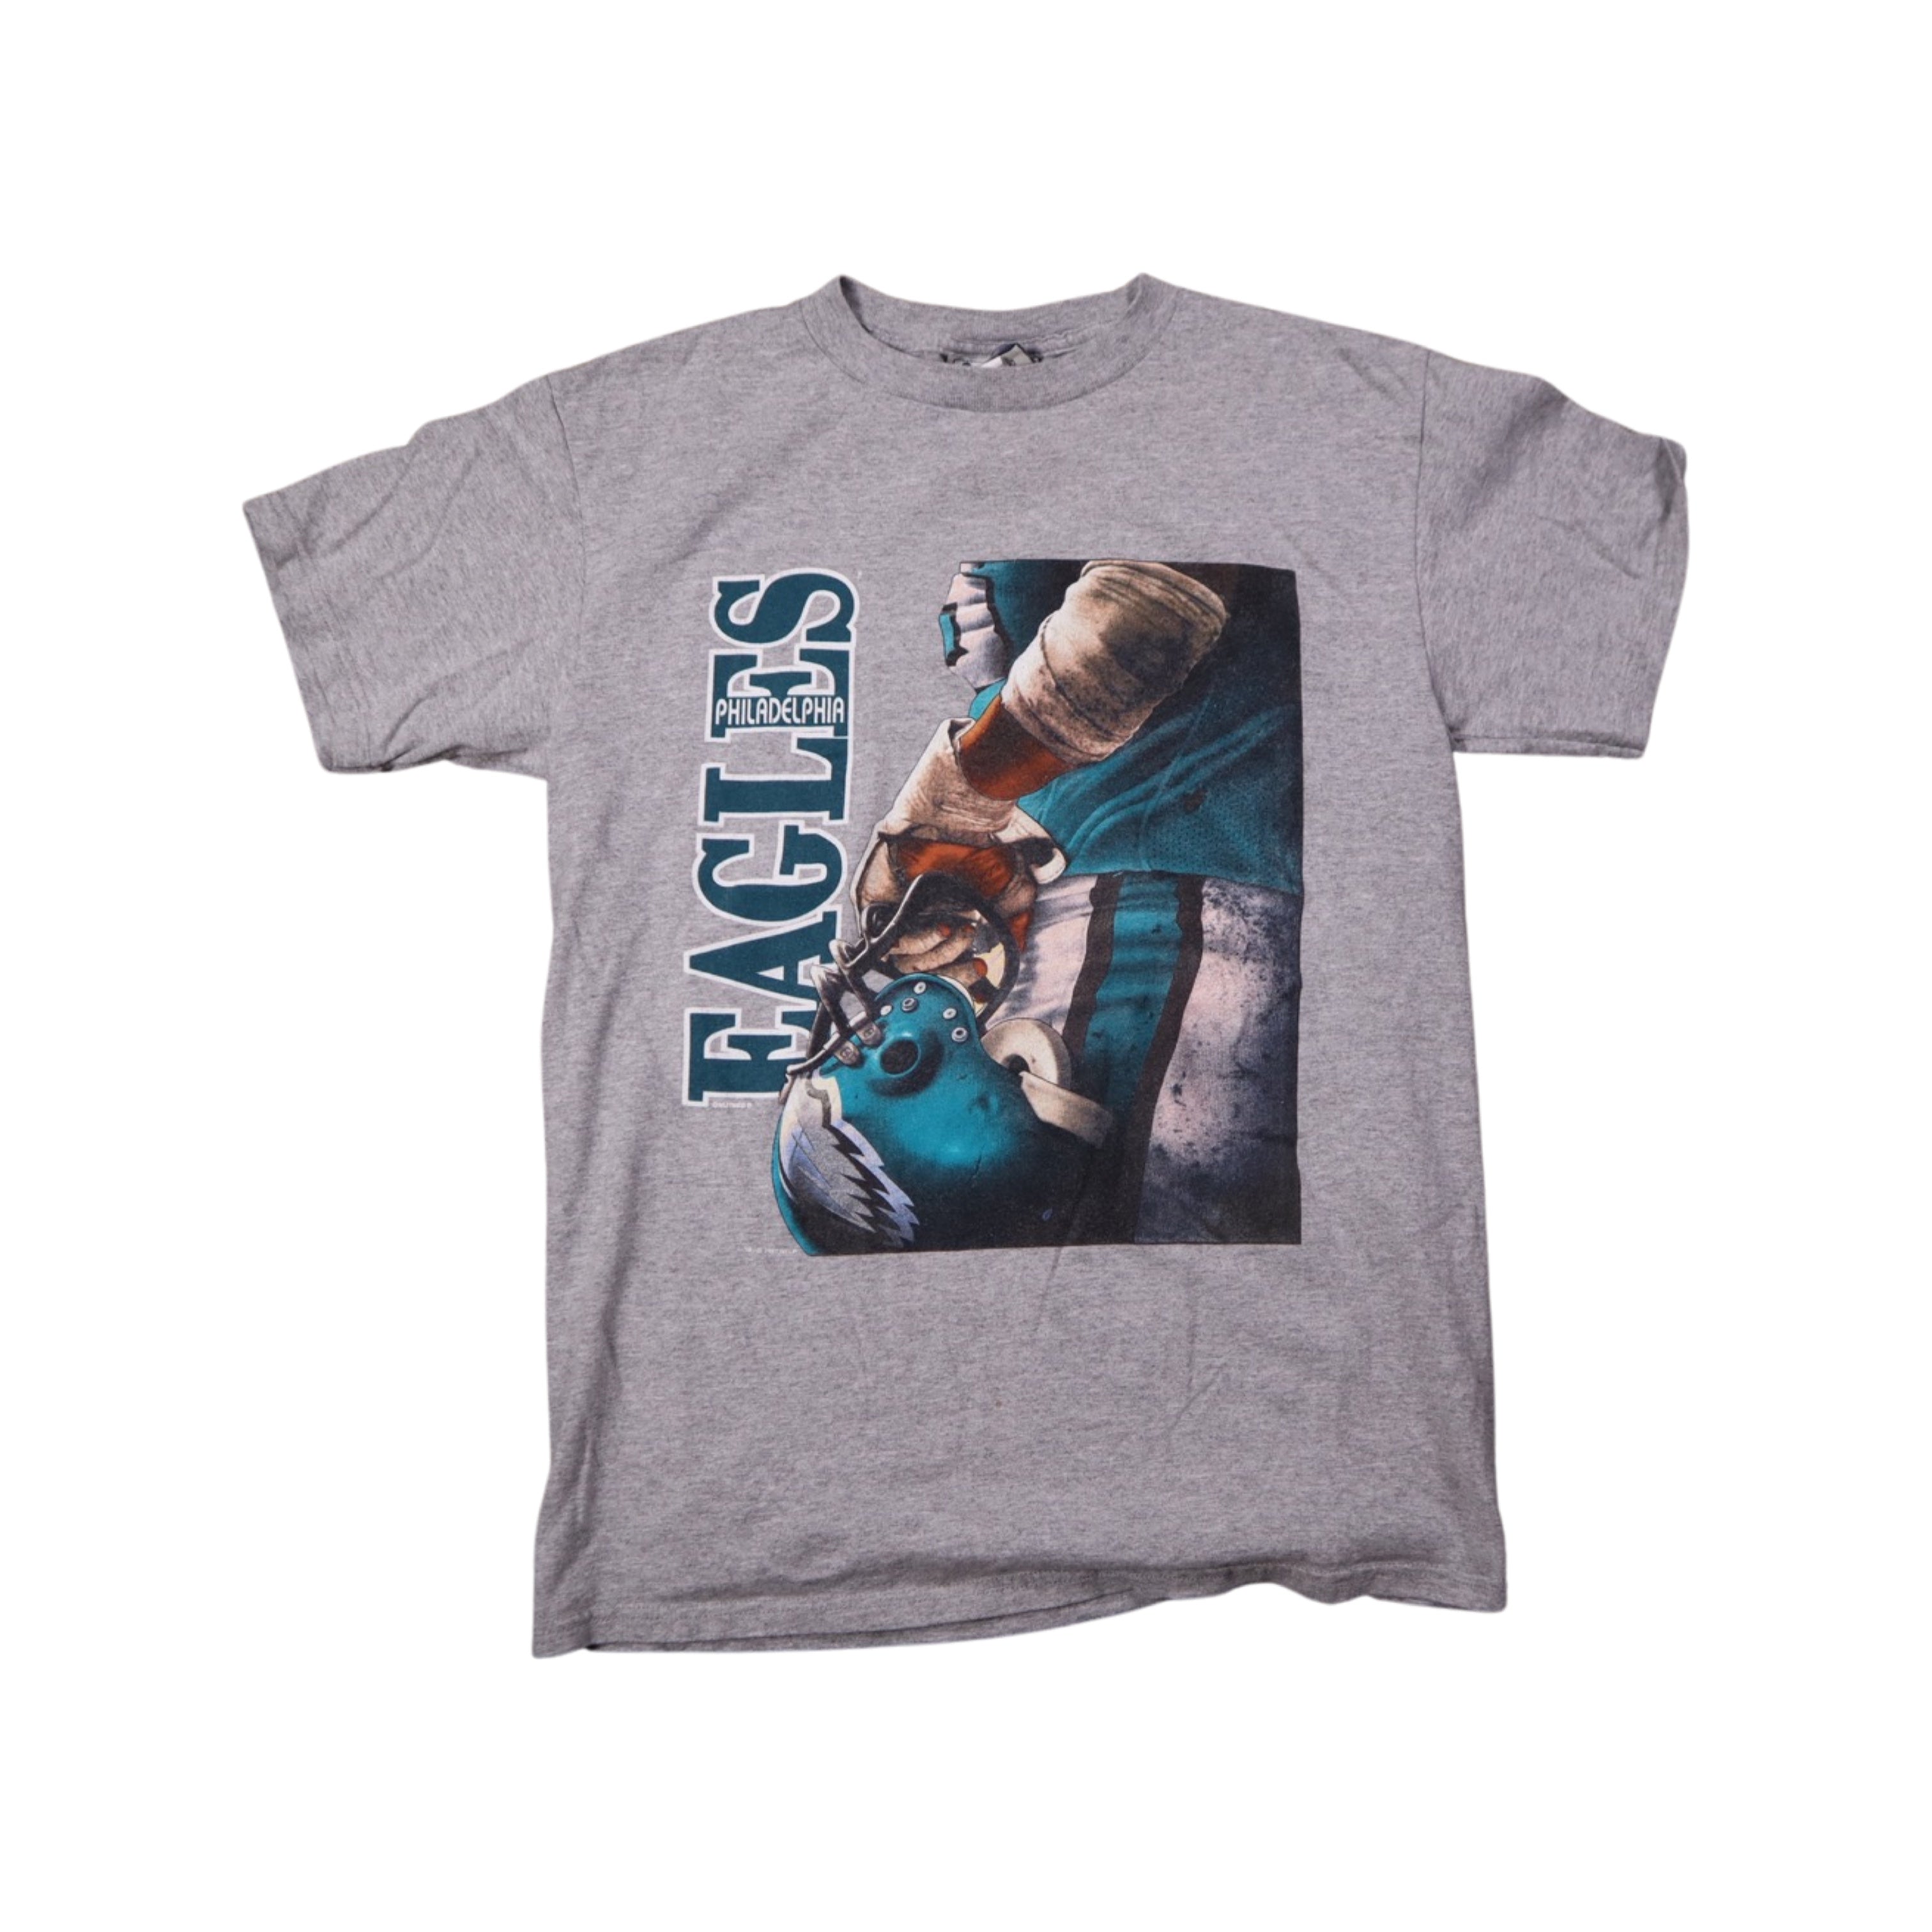 Philadelphia Eagles 1997 T-Shirt (Medium)